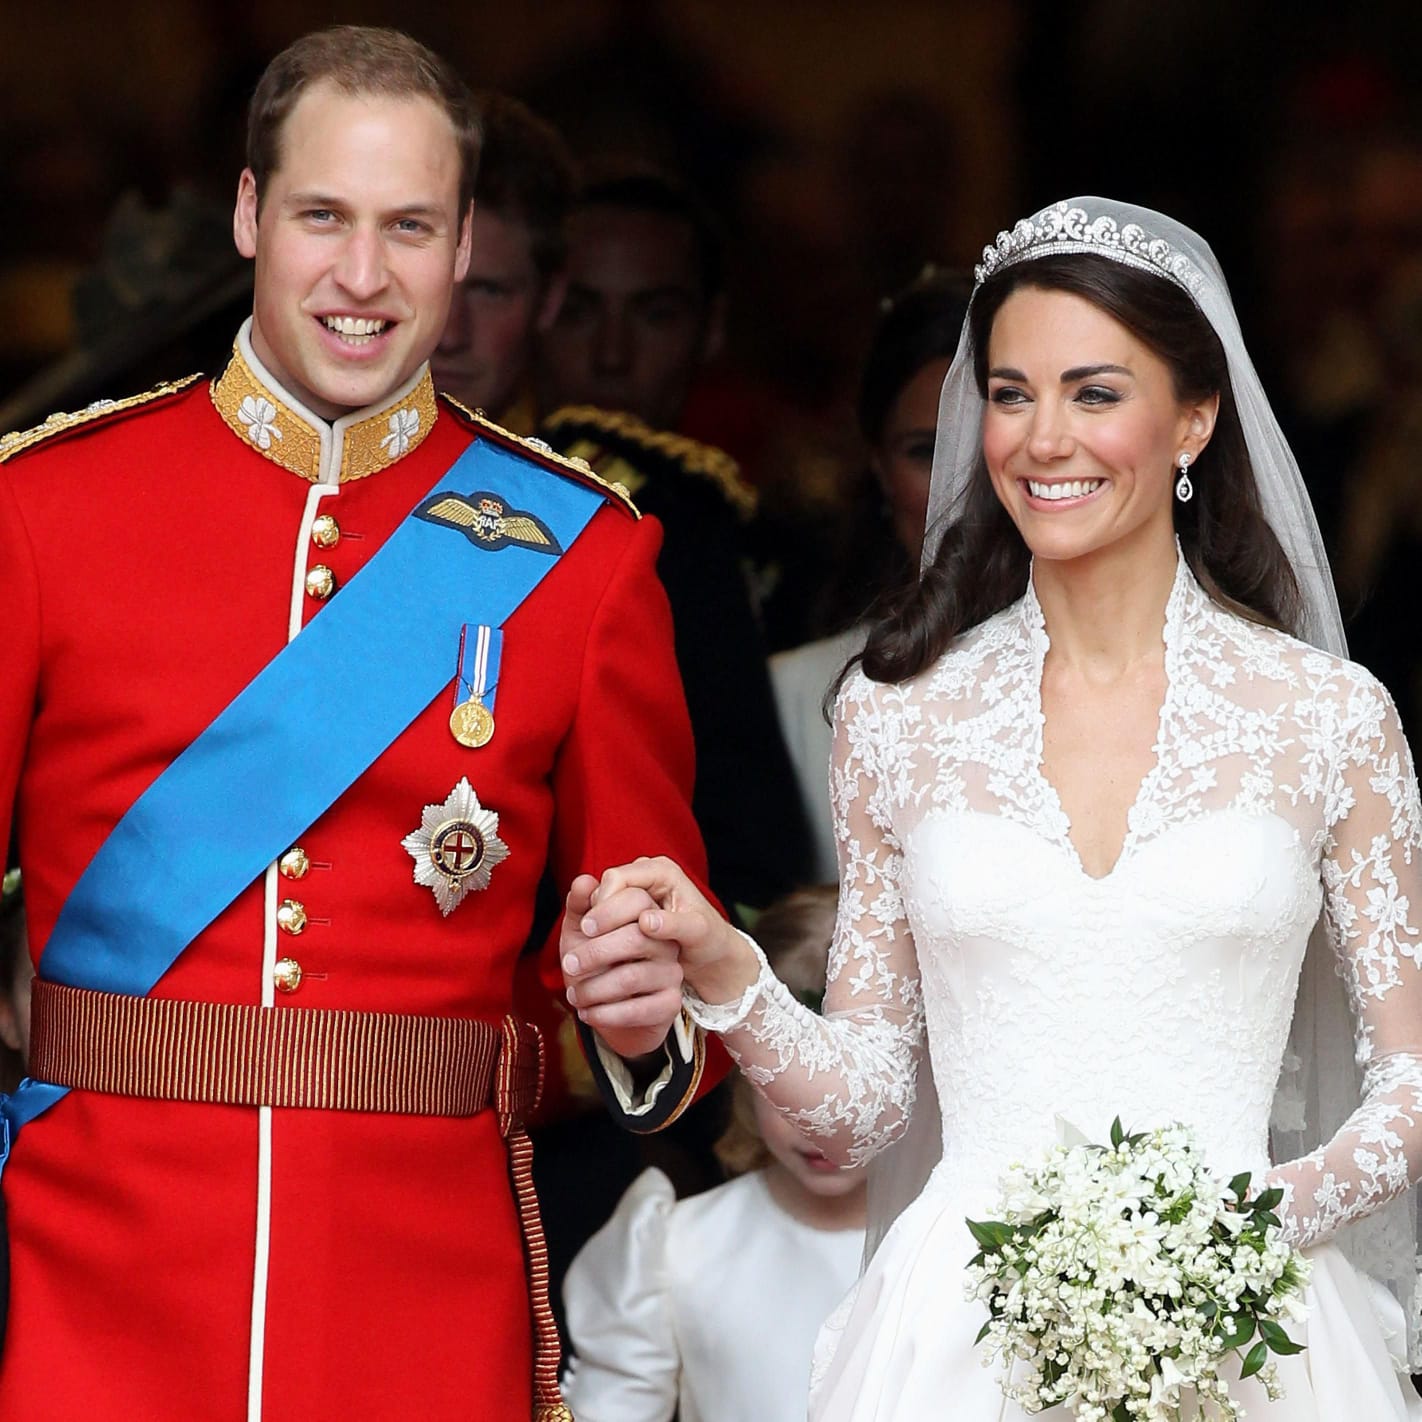 Prince William & Kate Middleton - EXPENSIVE WEDDING